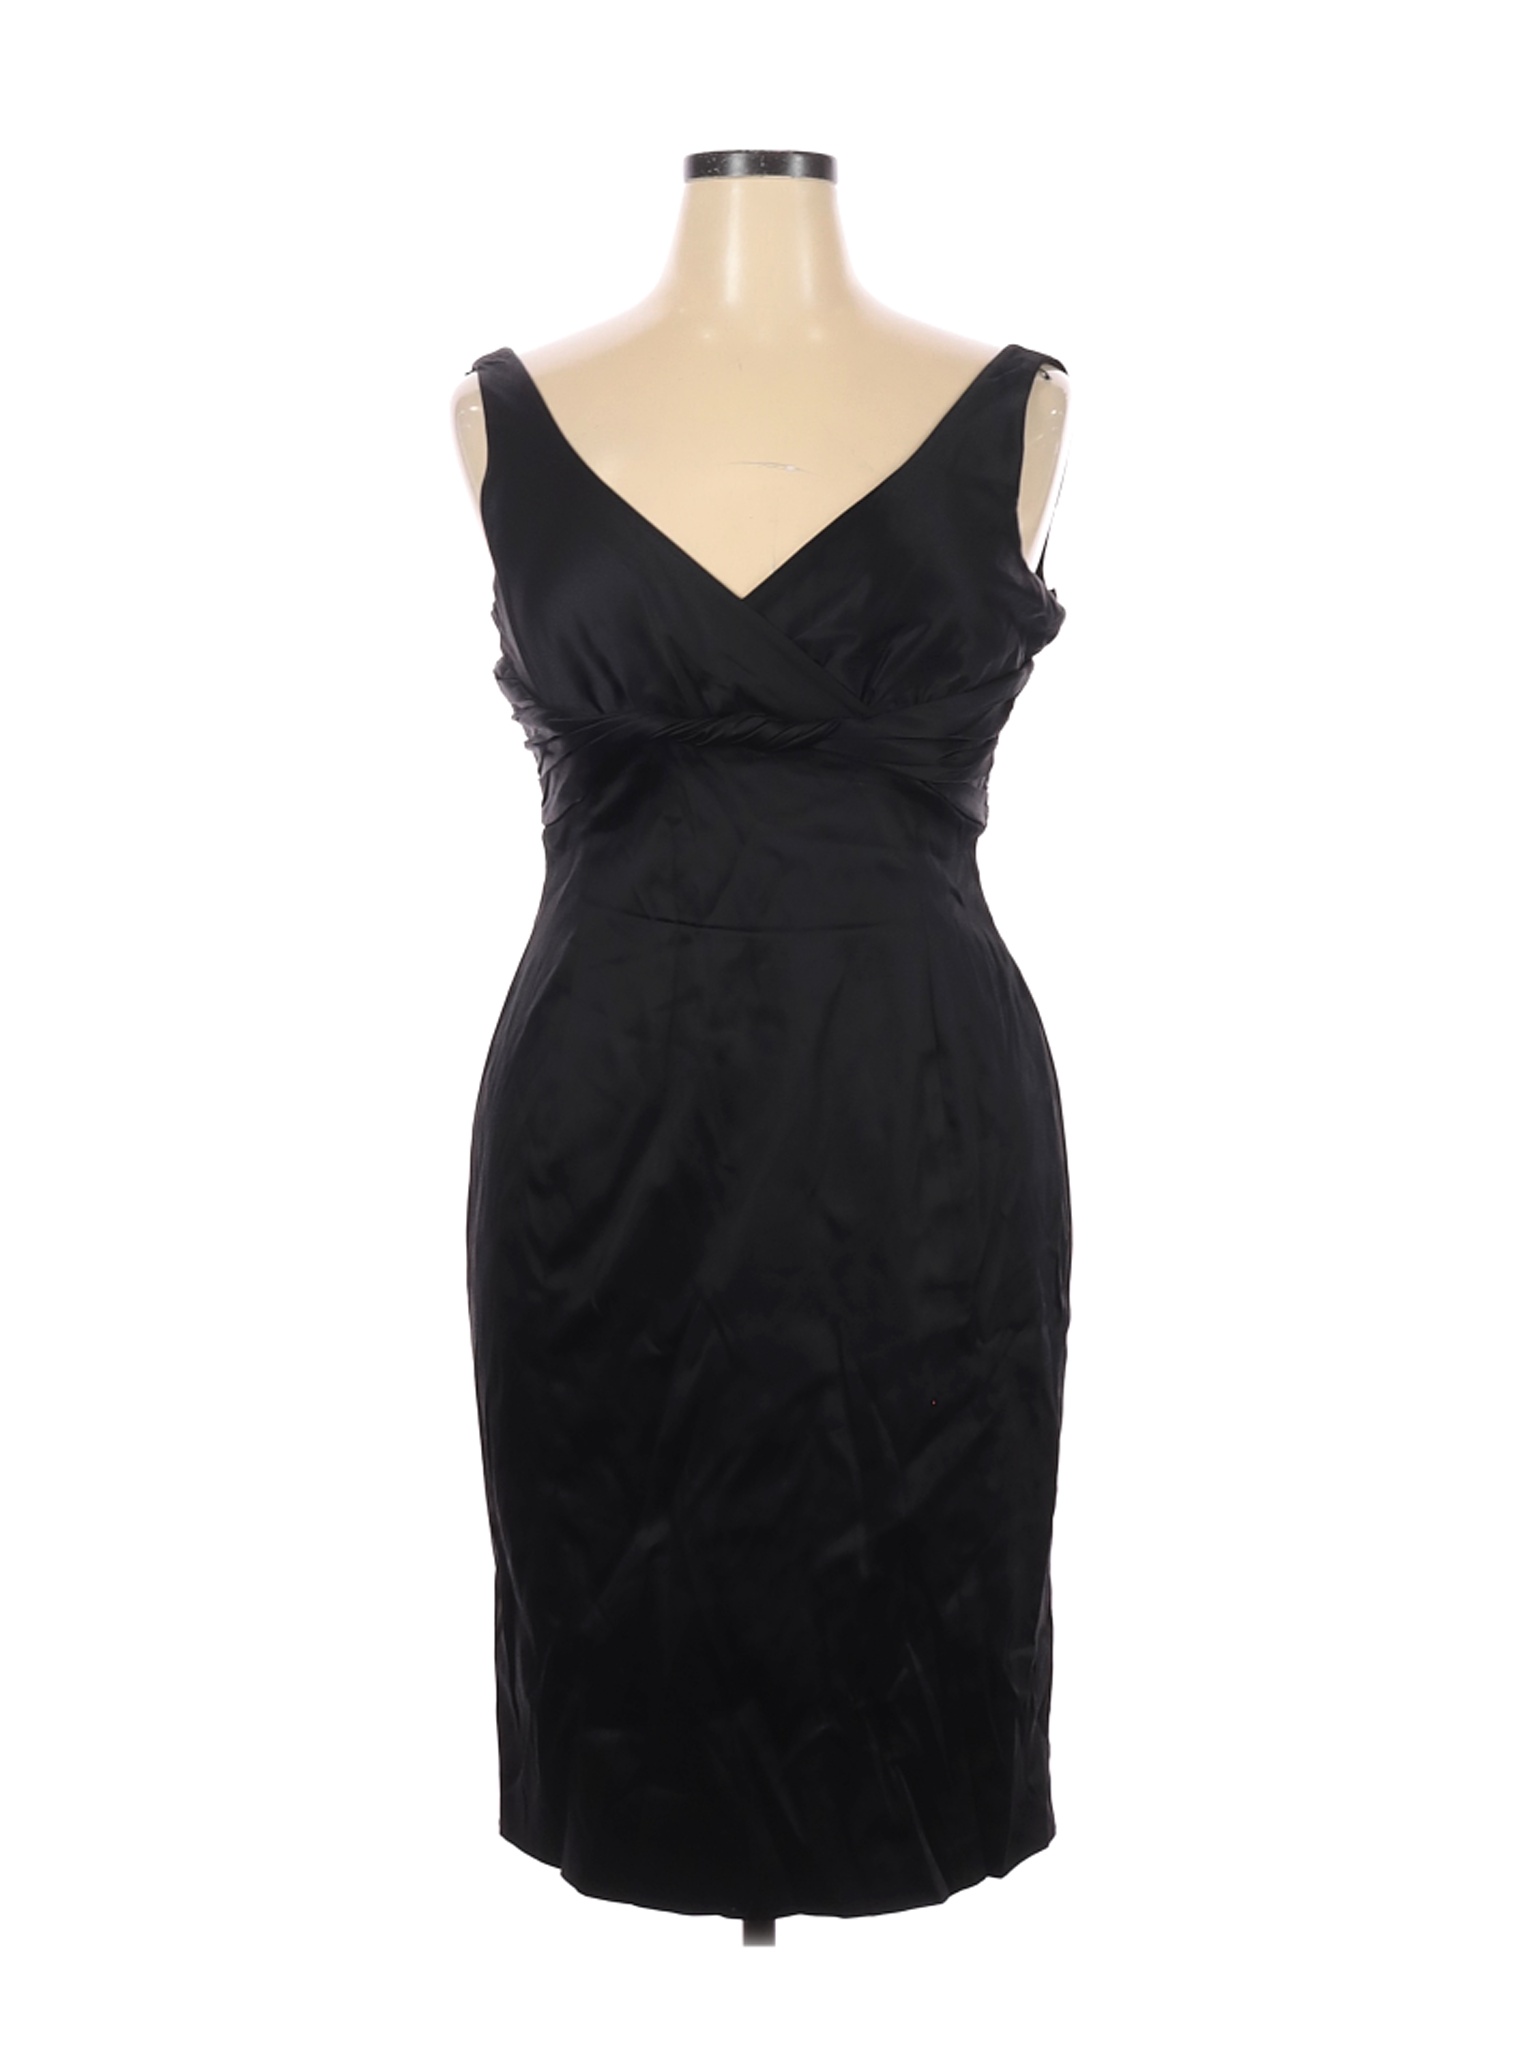 NWT Jones New York Women Black Cocktail Dress 14 | eBay